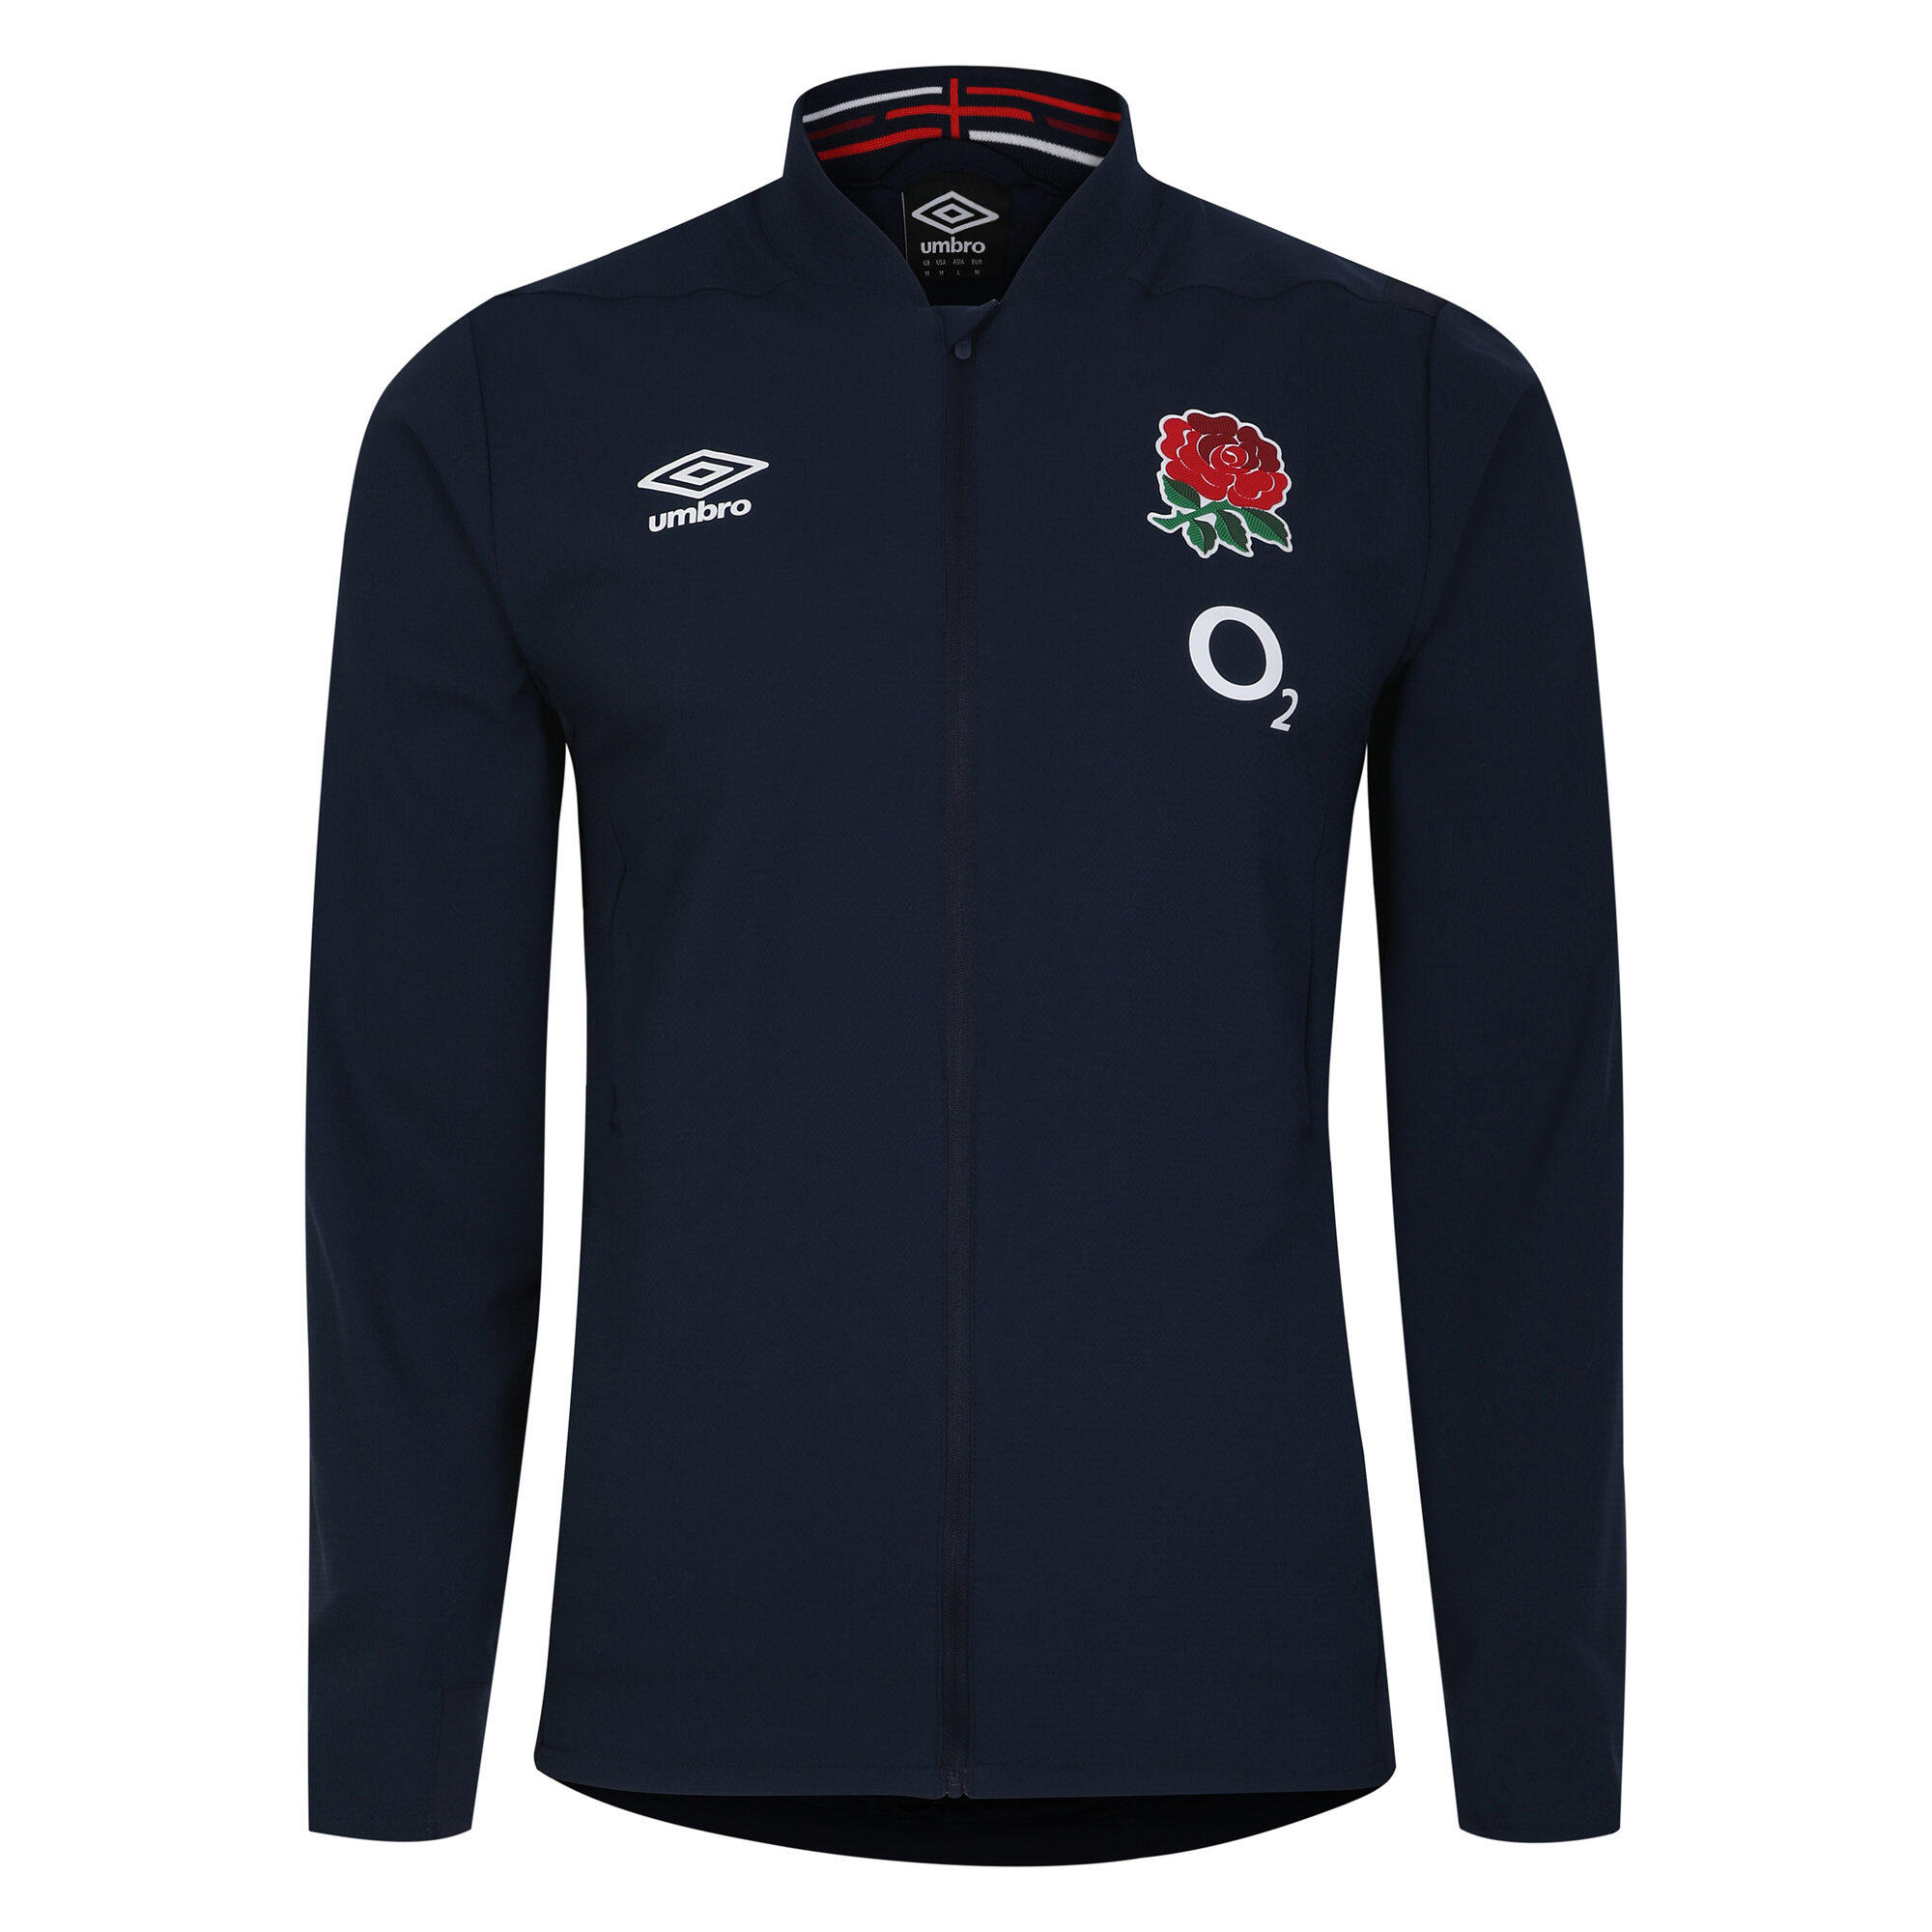 Mens 23/24 England Rugby Anthem Jacket (Navy Blazer) 1/4